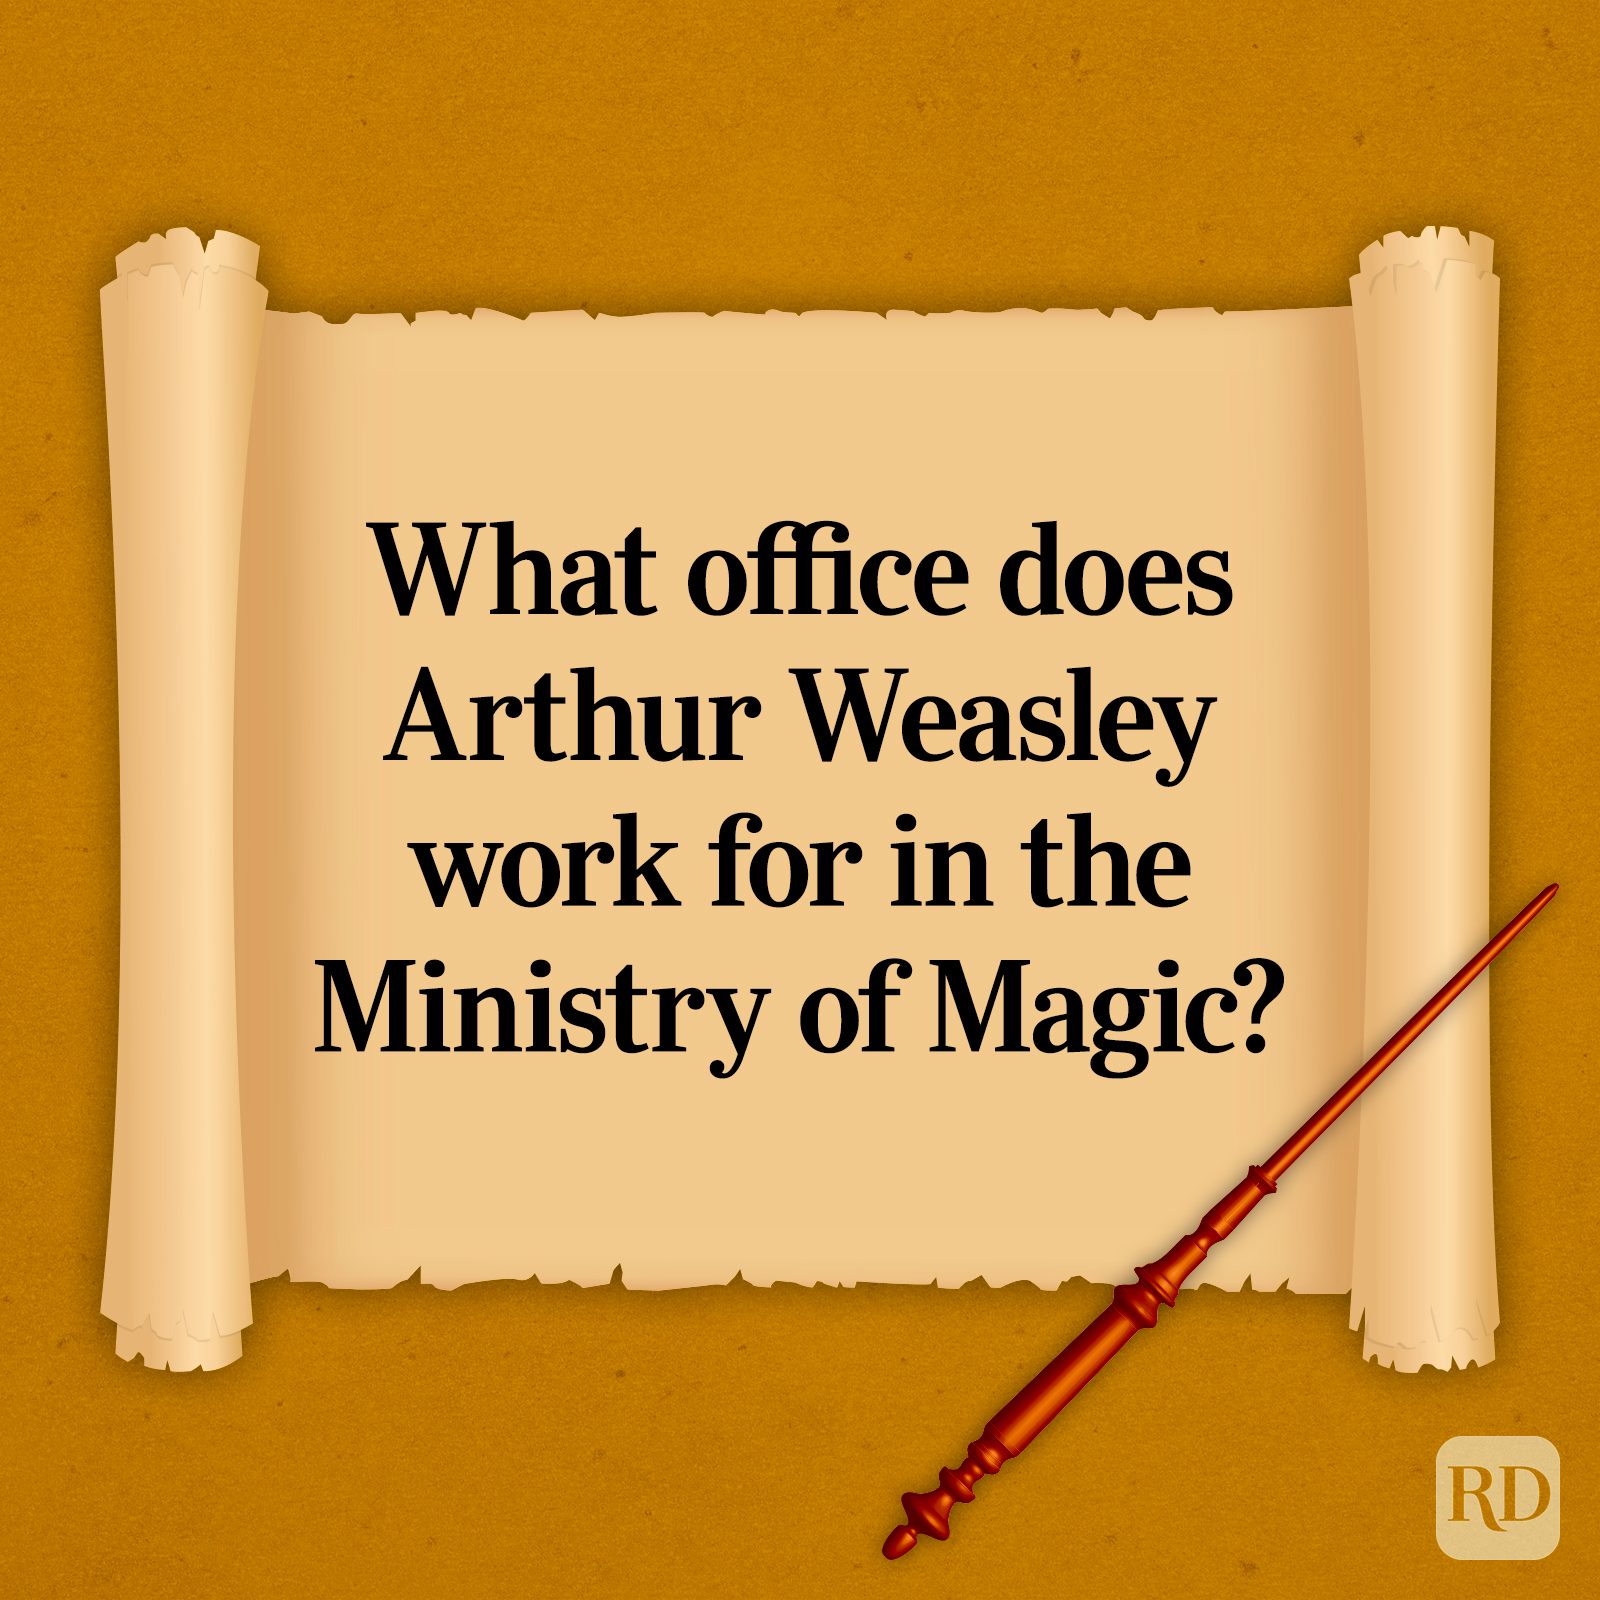 Harry Potter Trivia Question